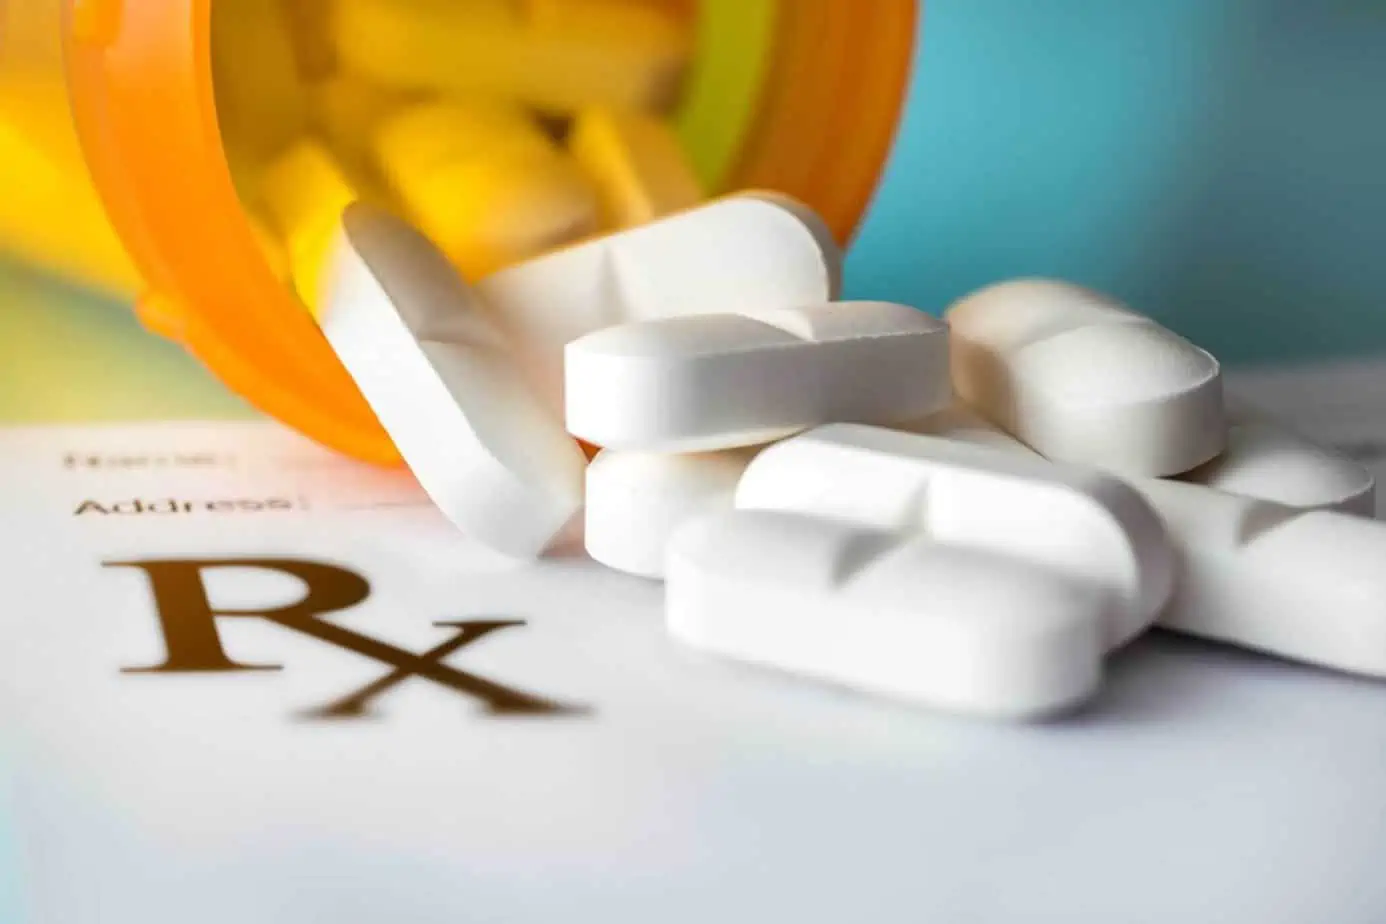 Close-up image of a prescription medication bottle with spilled pills